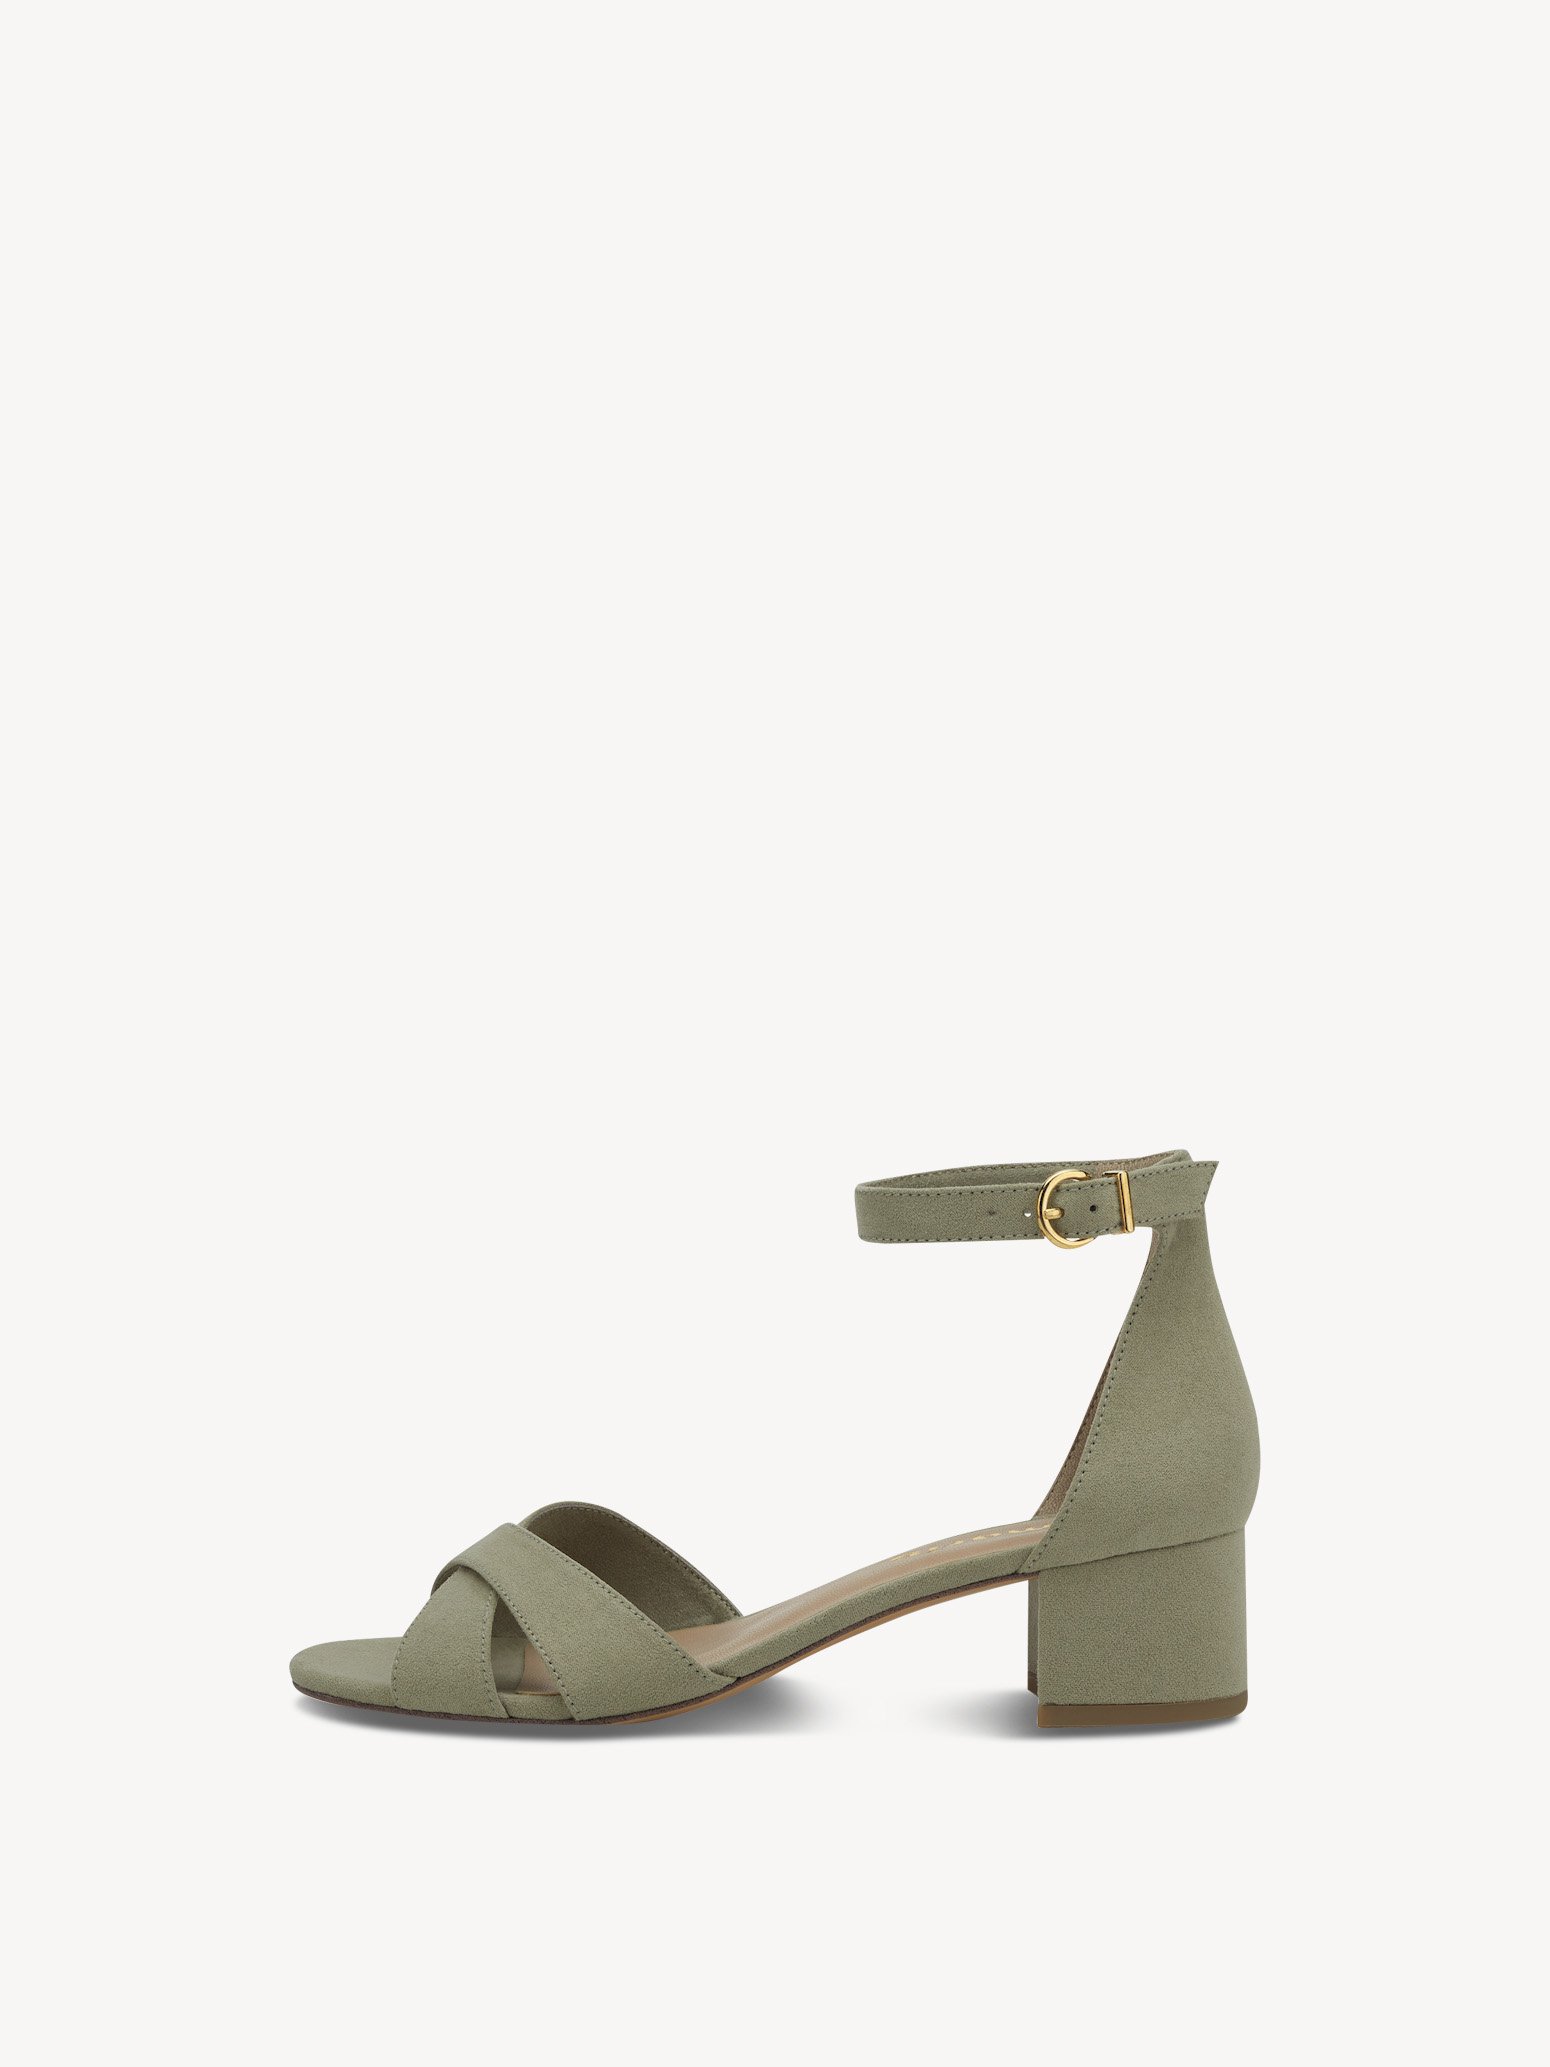 Green buckle slip on chunk heel shoe sandal | Womens shoe sandals online  2230WS